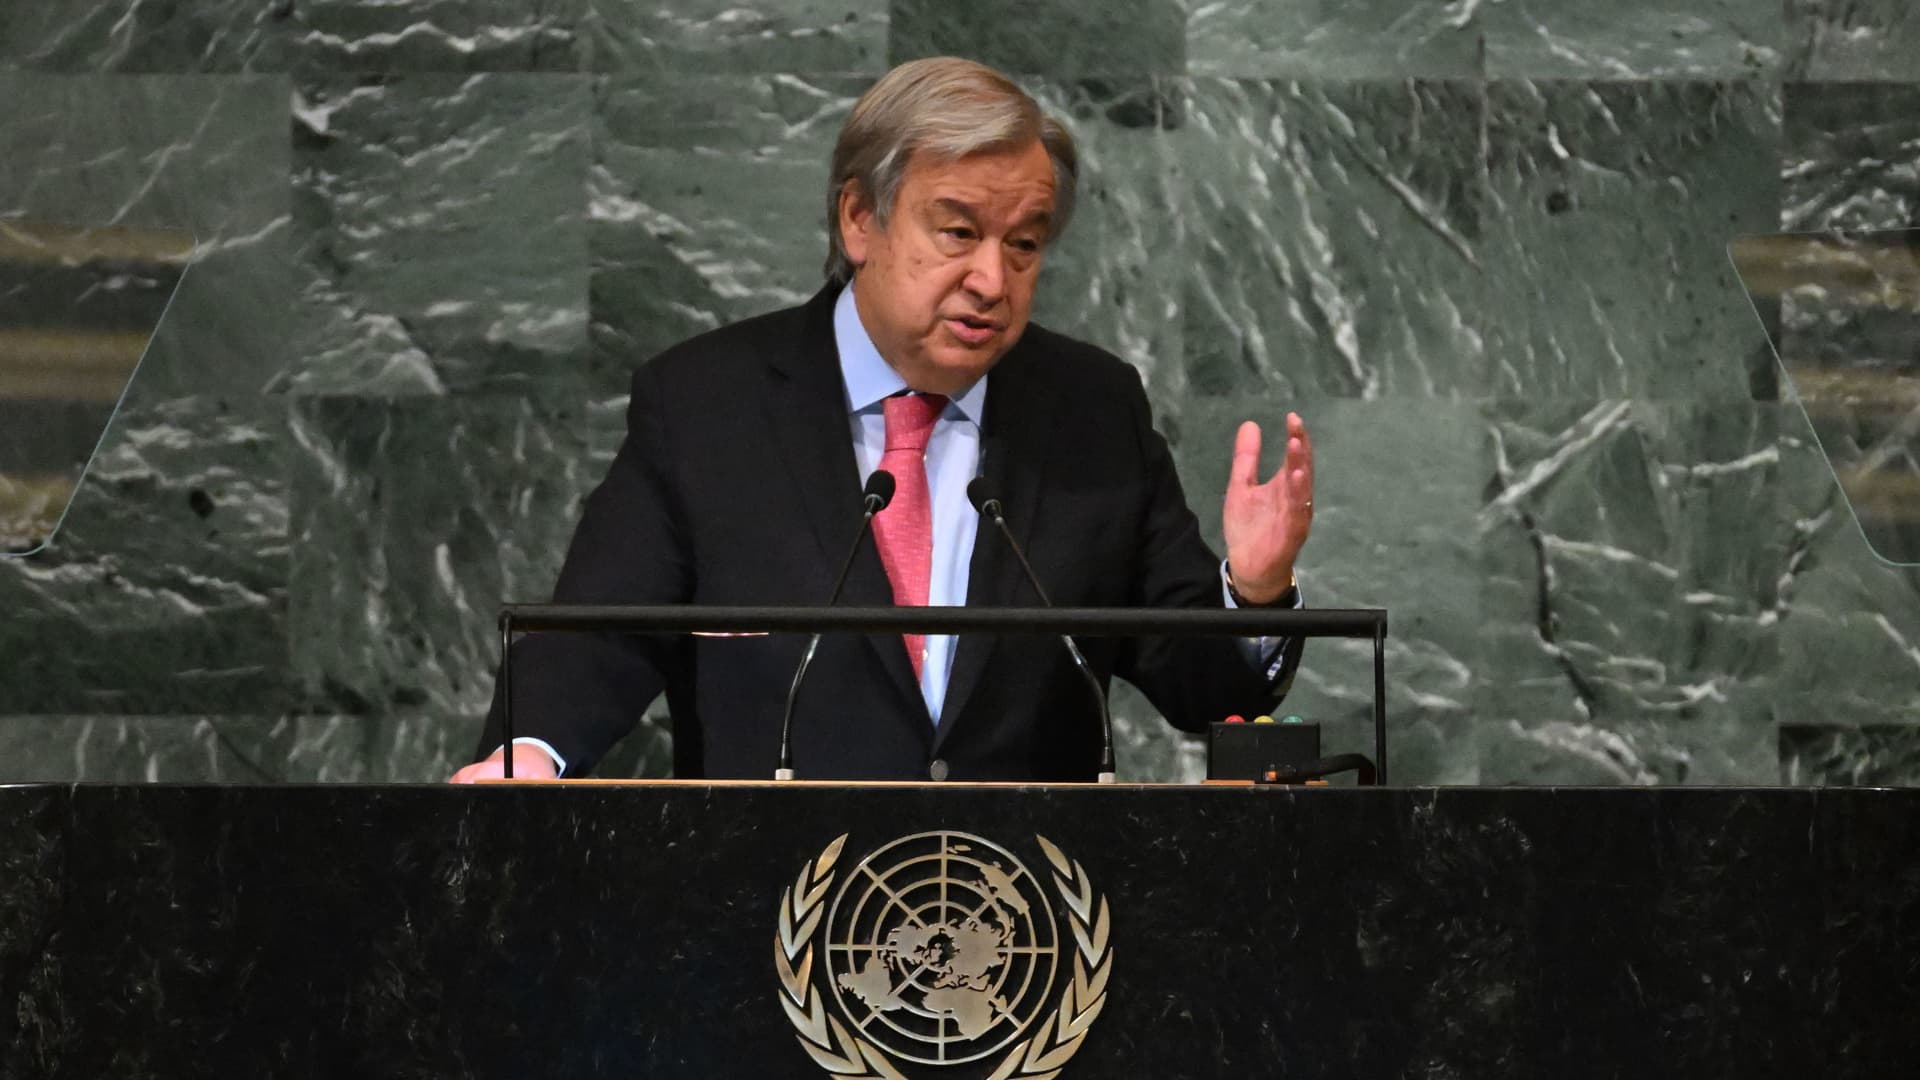 Antonio Guterres says the world is in peril